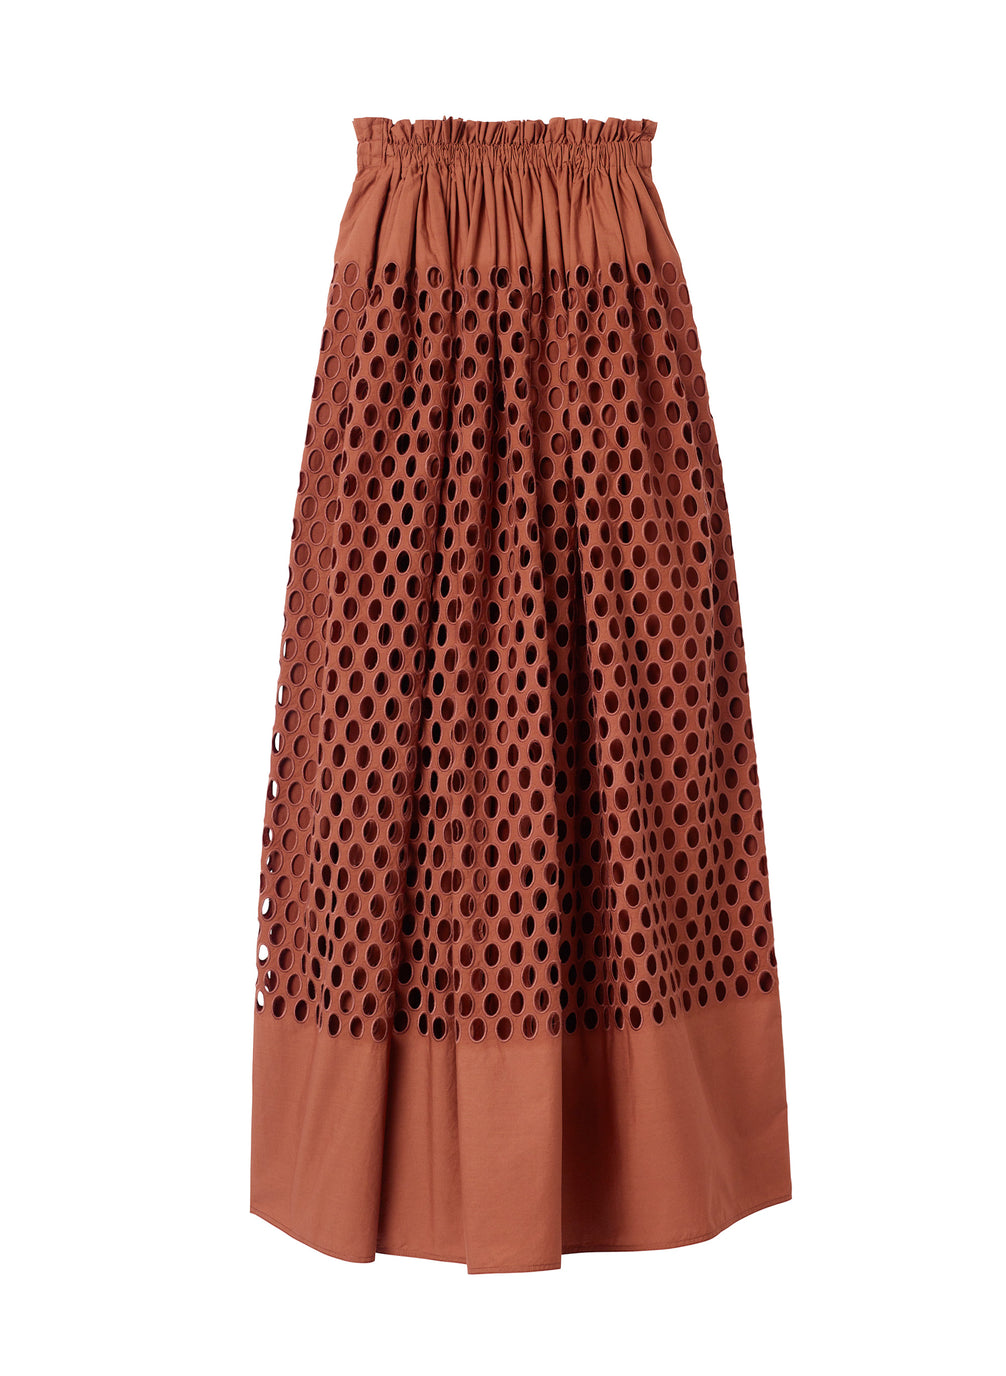 flatlay of brown maxi skirt